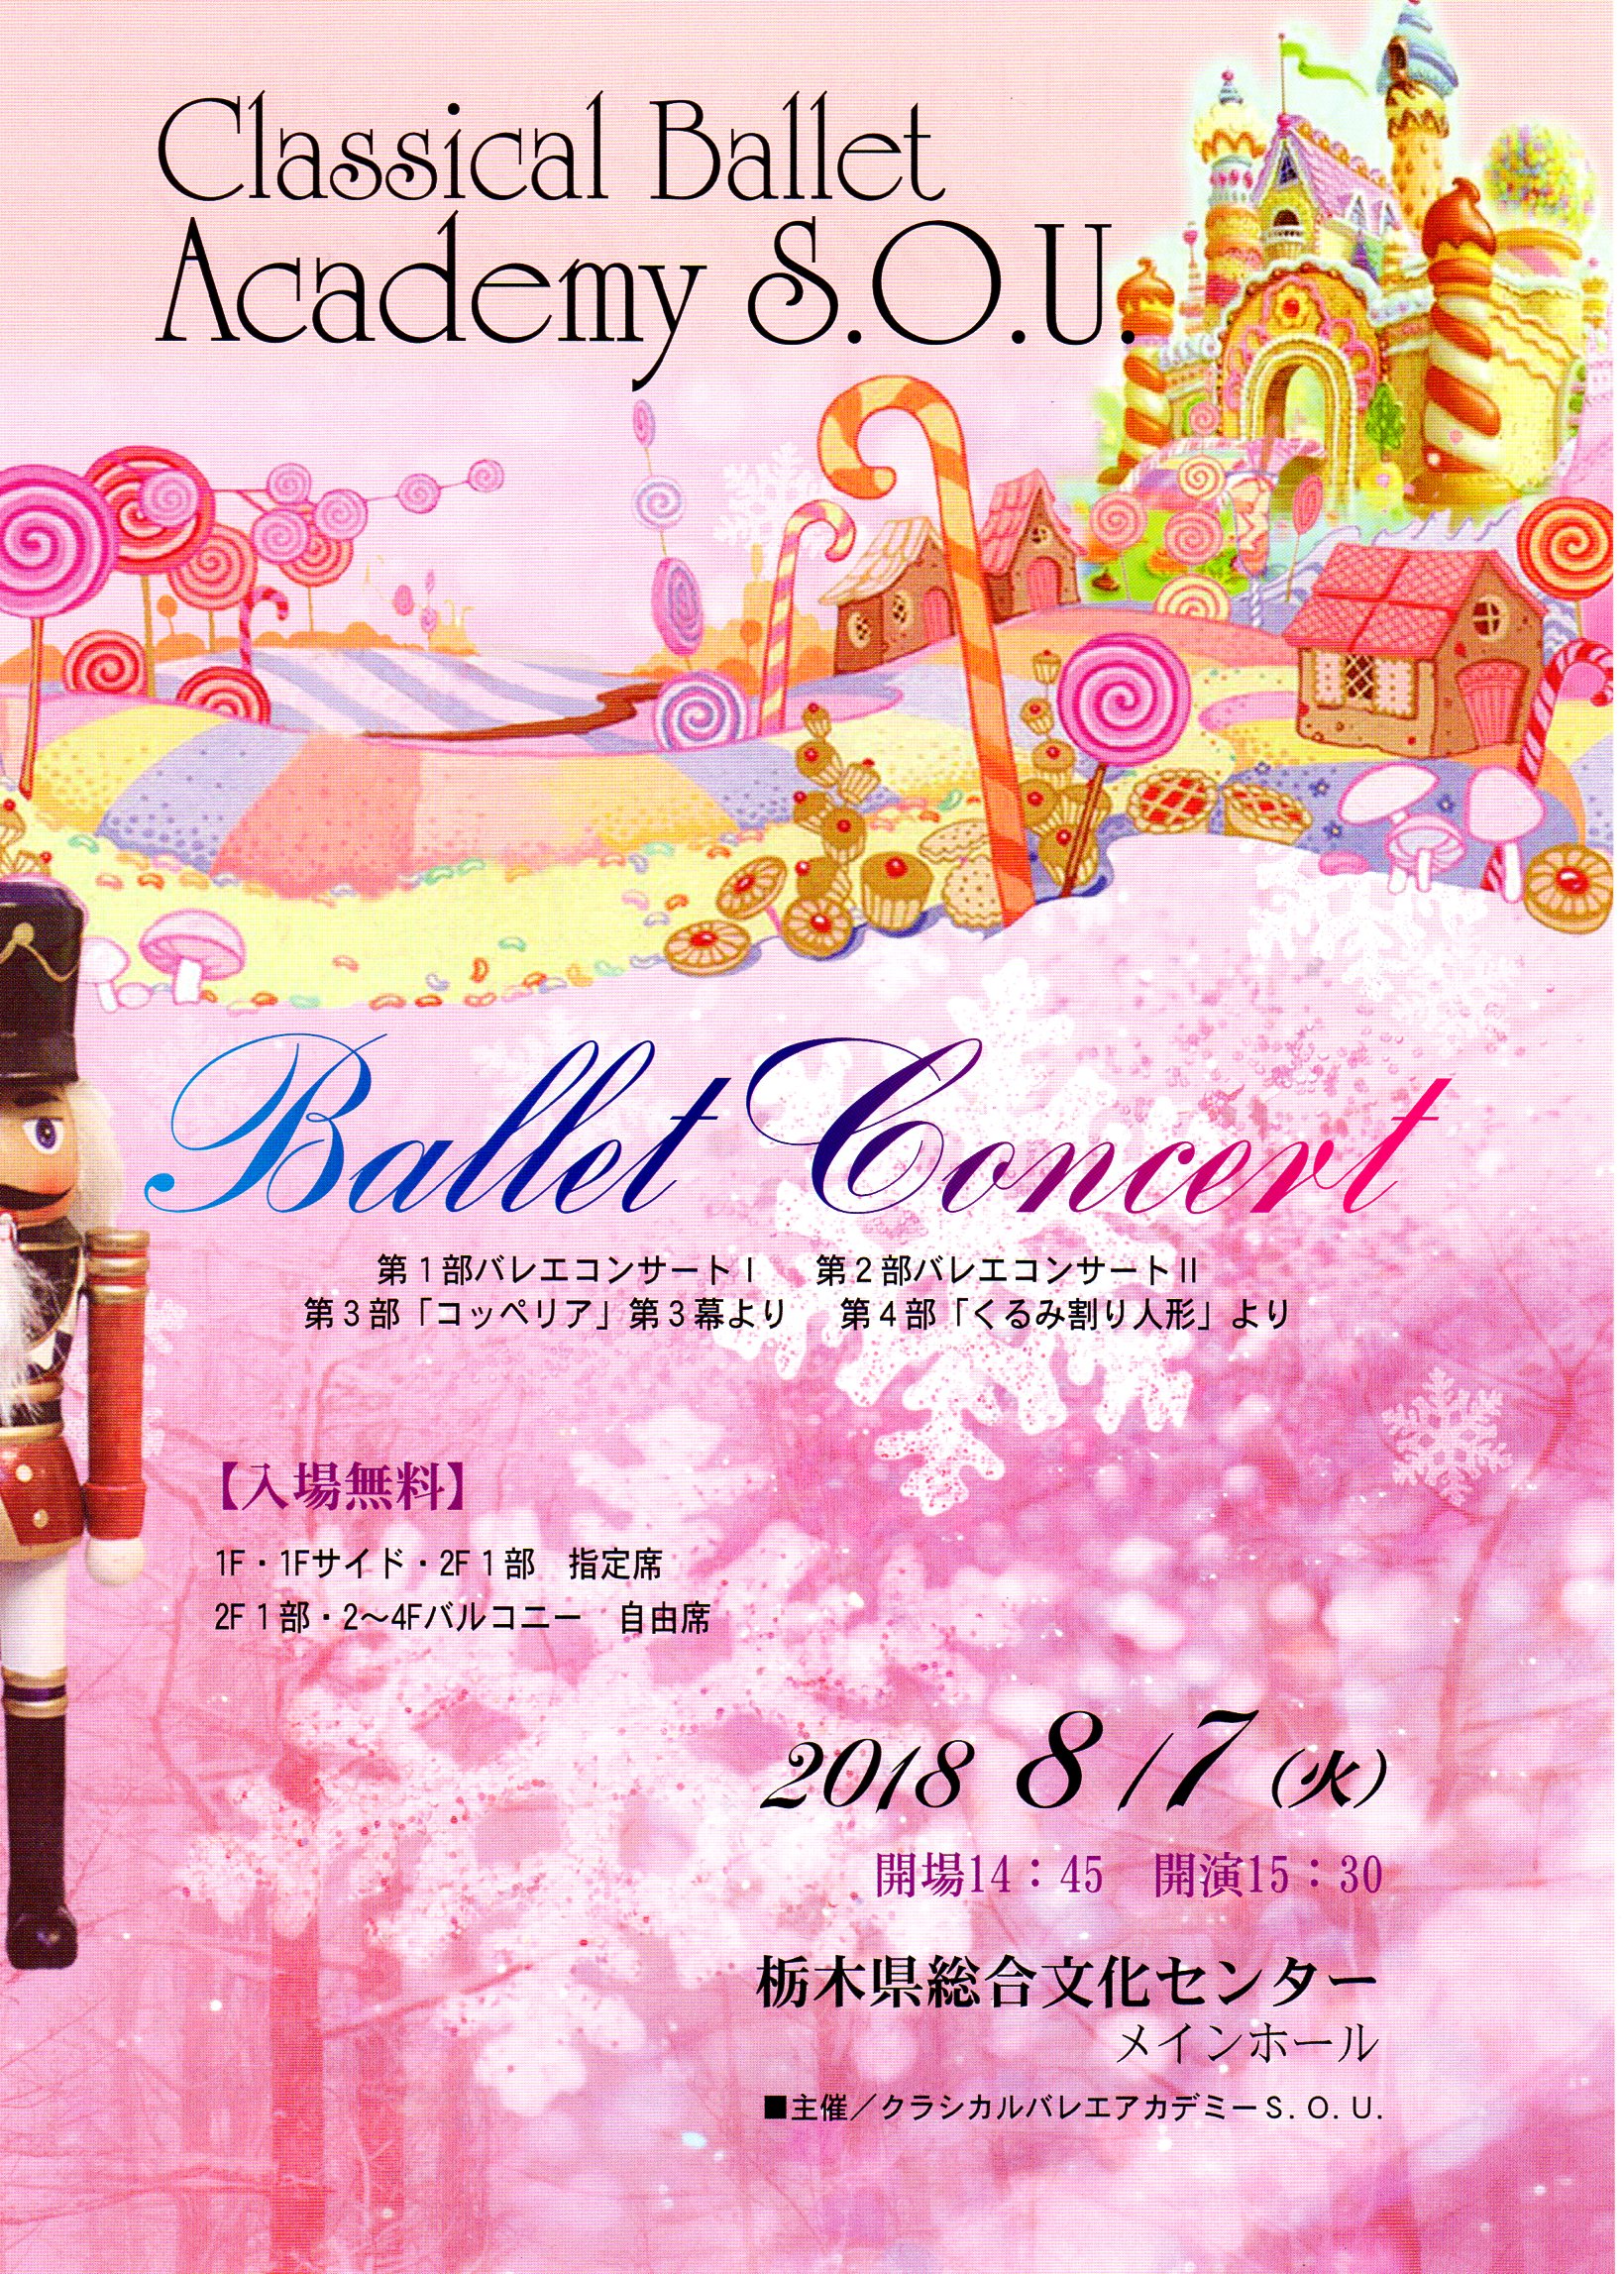 Classical Ballet Academi　S.O.U.　2018　Ballet Concert 表